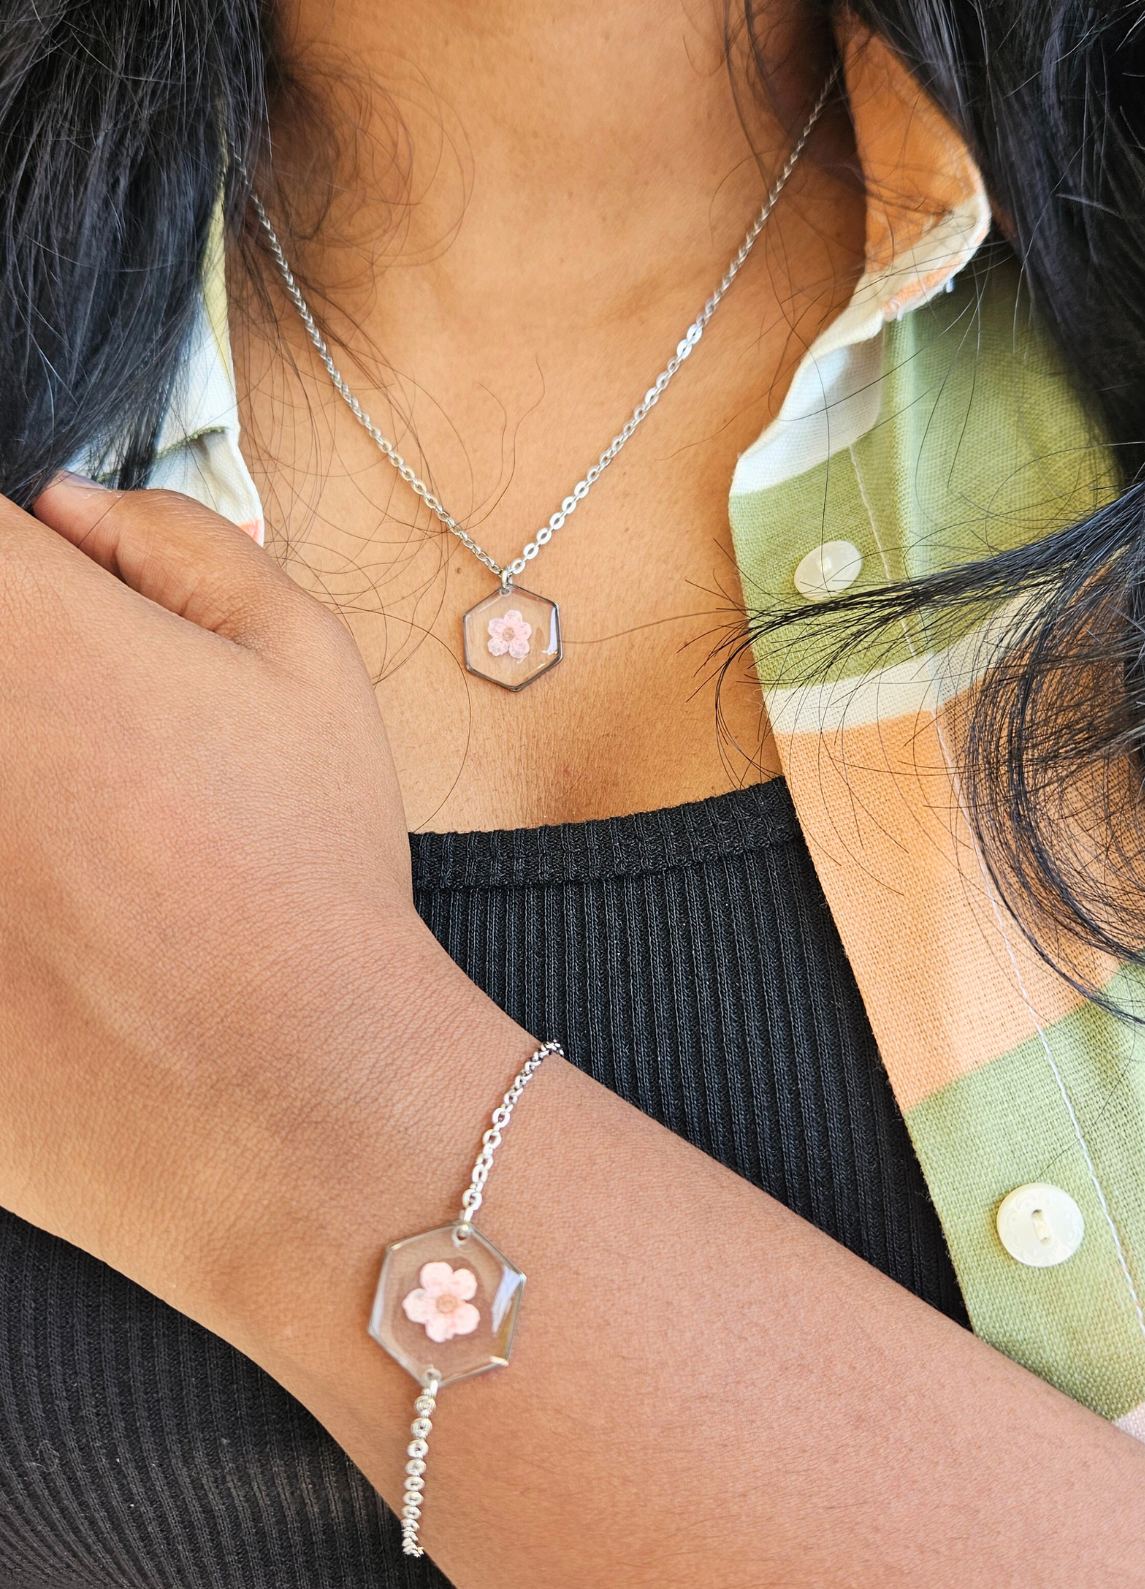 Pink Forget me not bracelet | Real Flower Jewellery | Elnorah